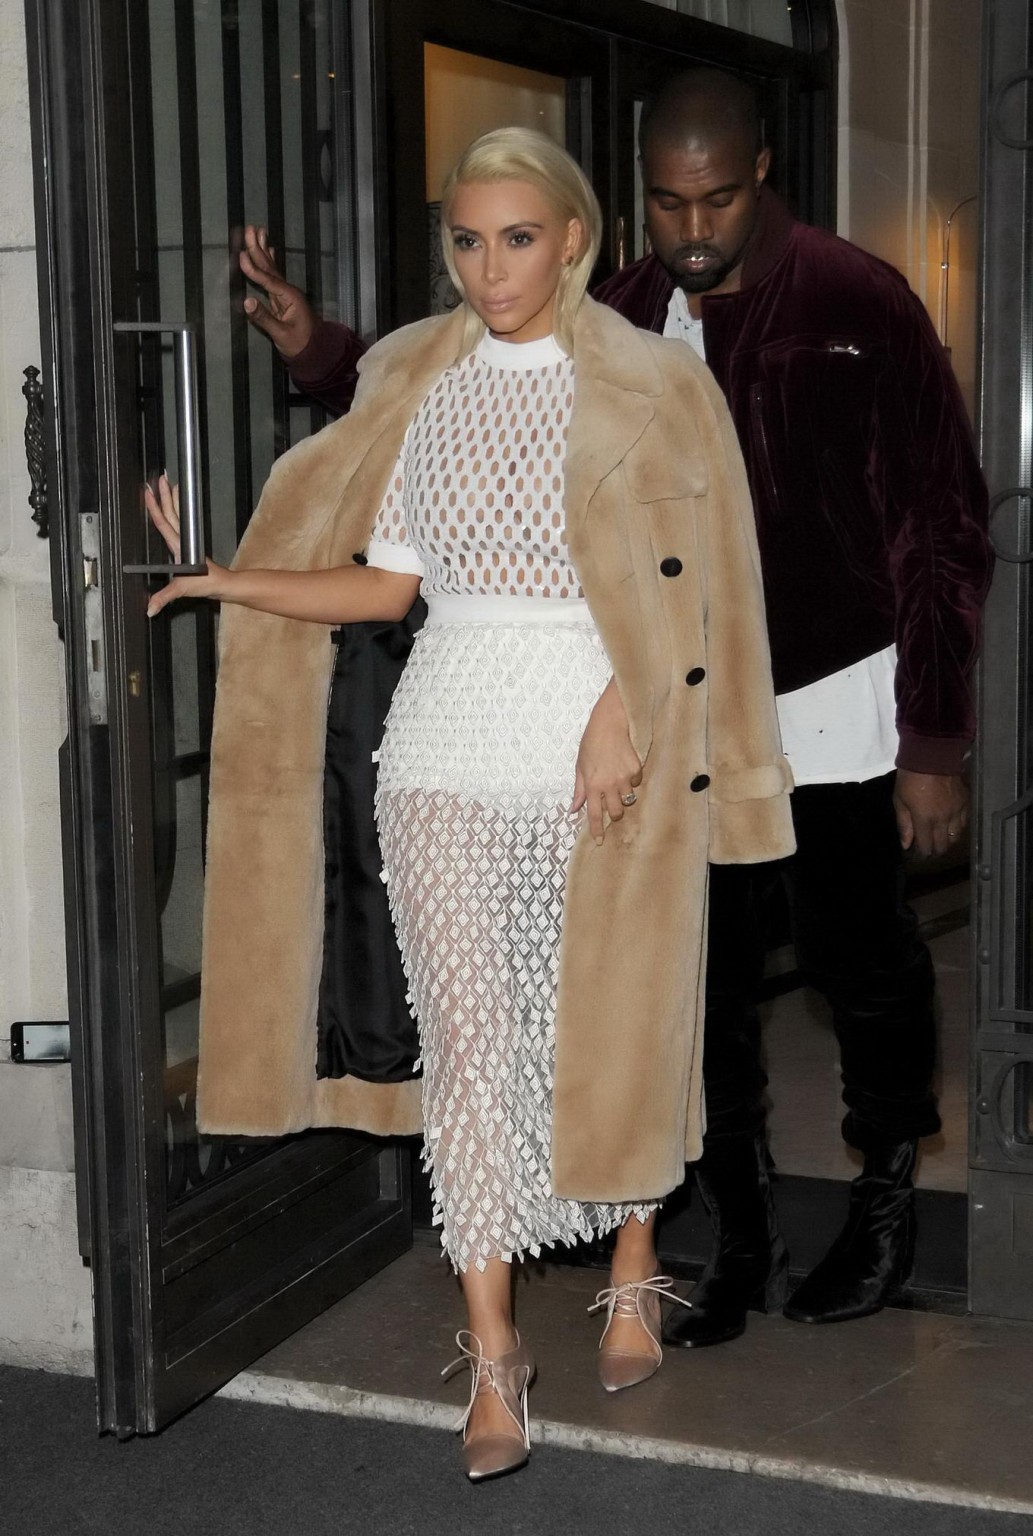 Kim Kardashian in a white mesh dress leaving her hotel in Paris #75170604